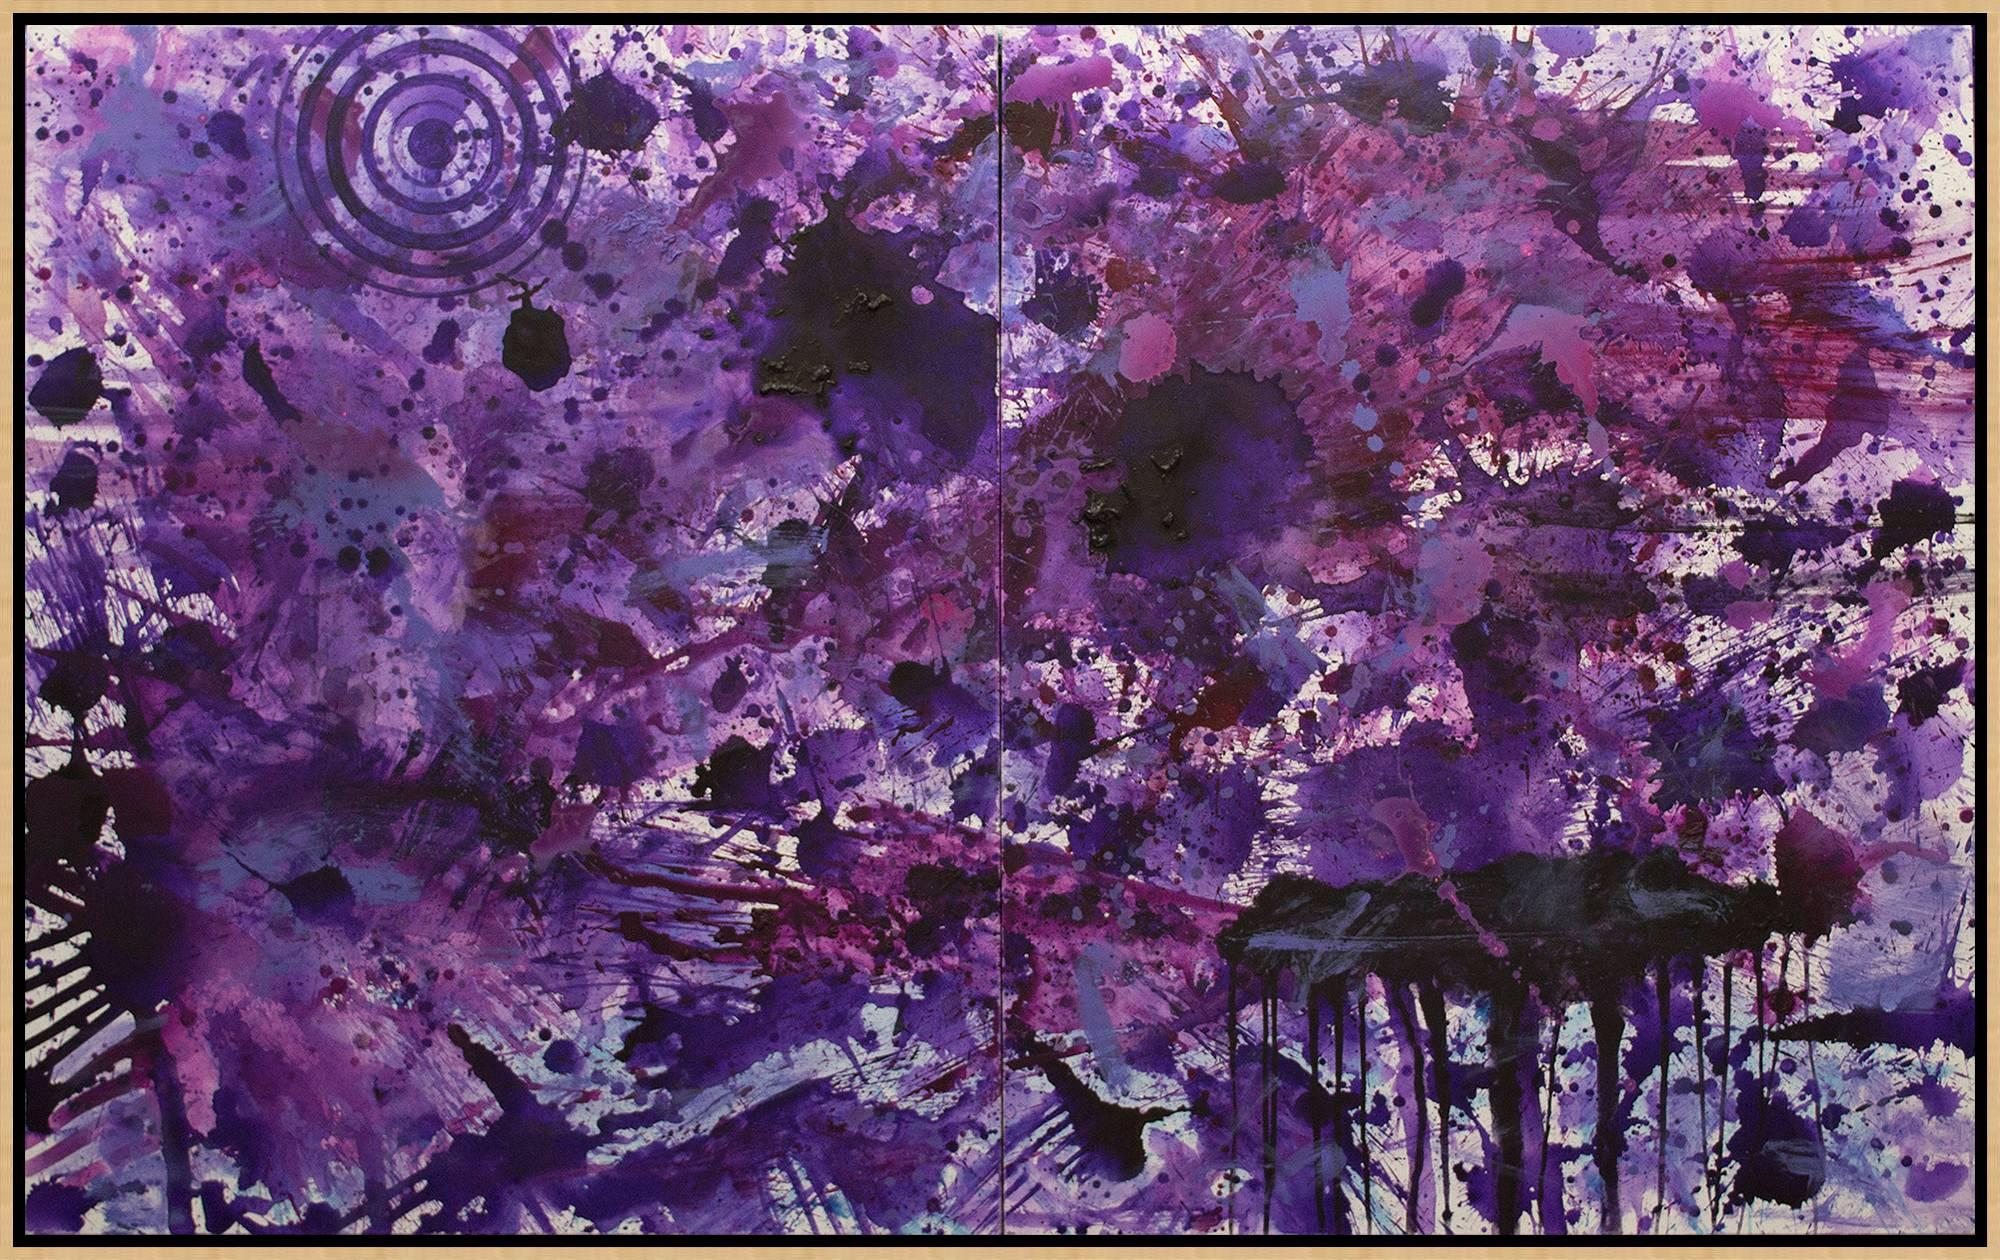 PurpleField - Painting by J. Steven Manolis